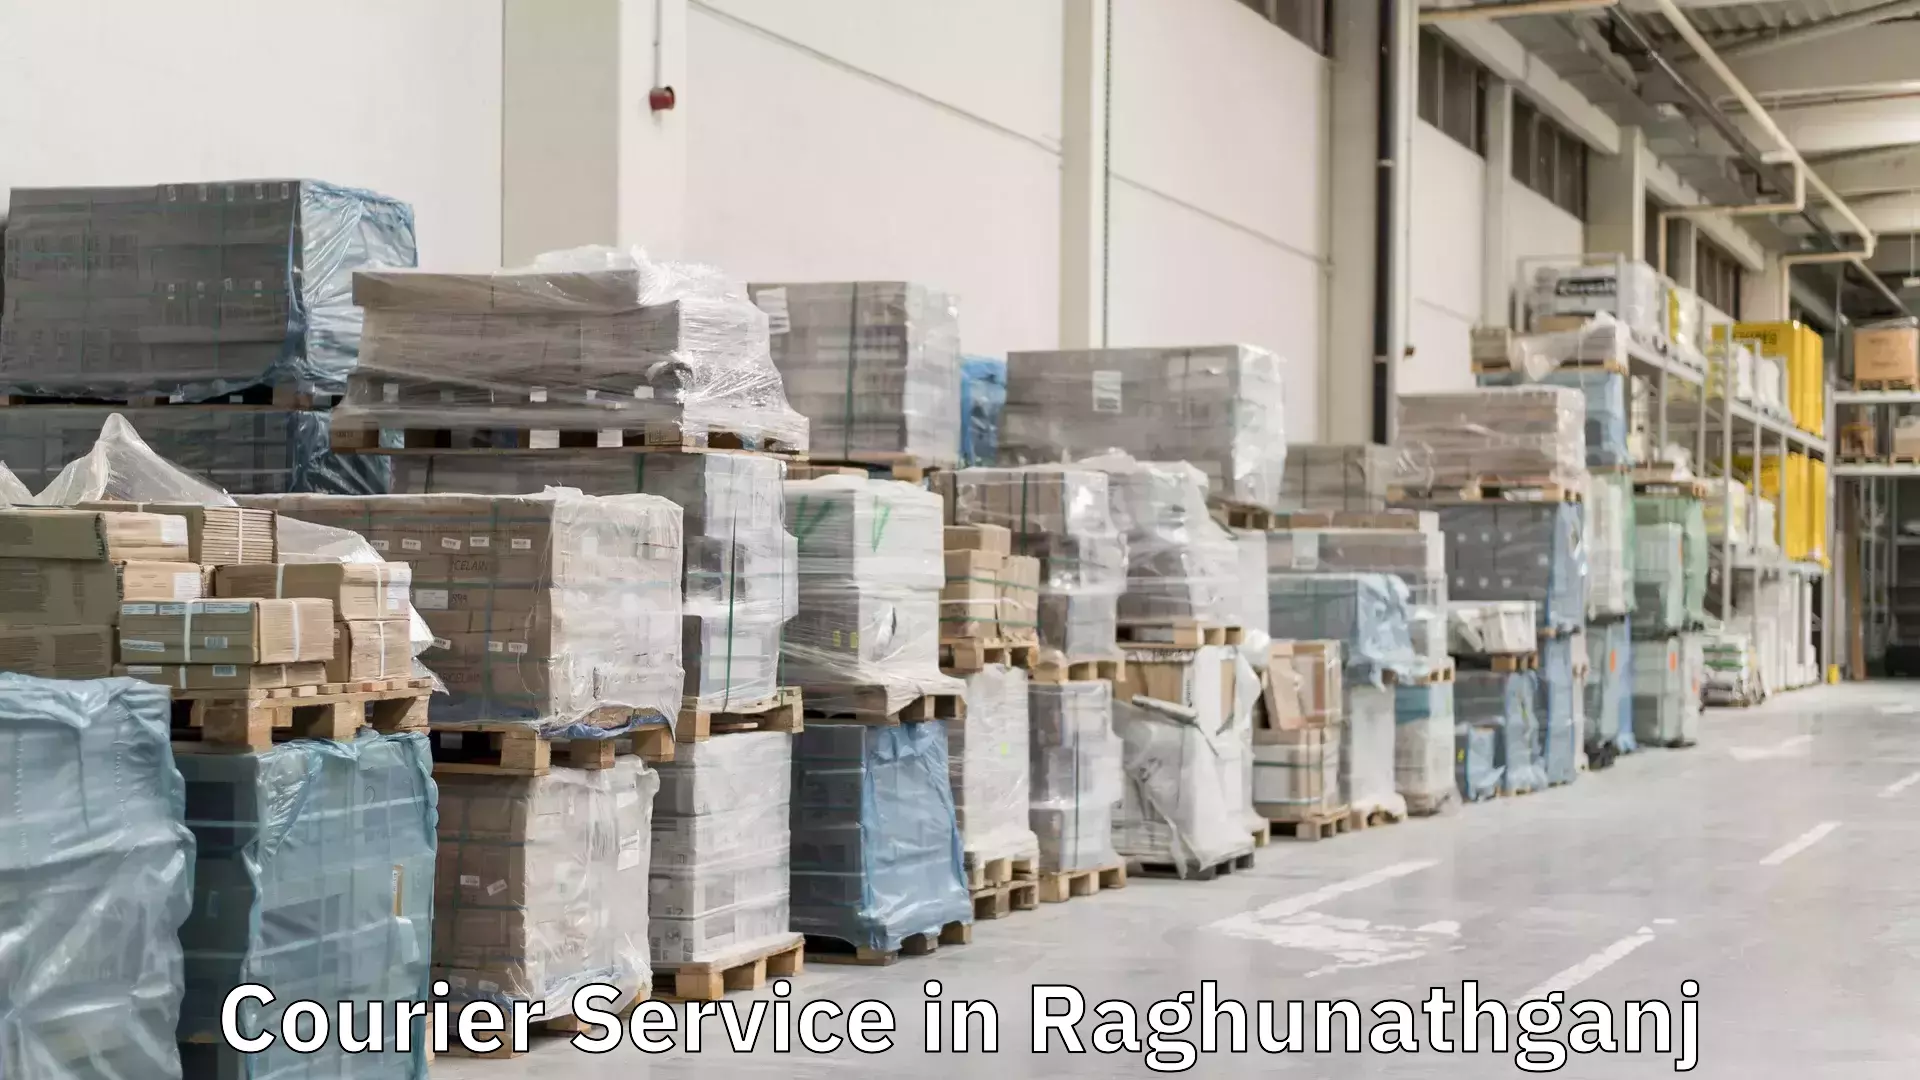 High-performance logistics in Raghunathganj